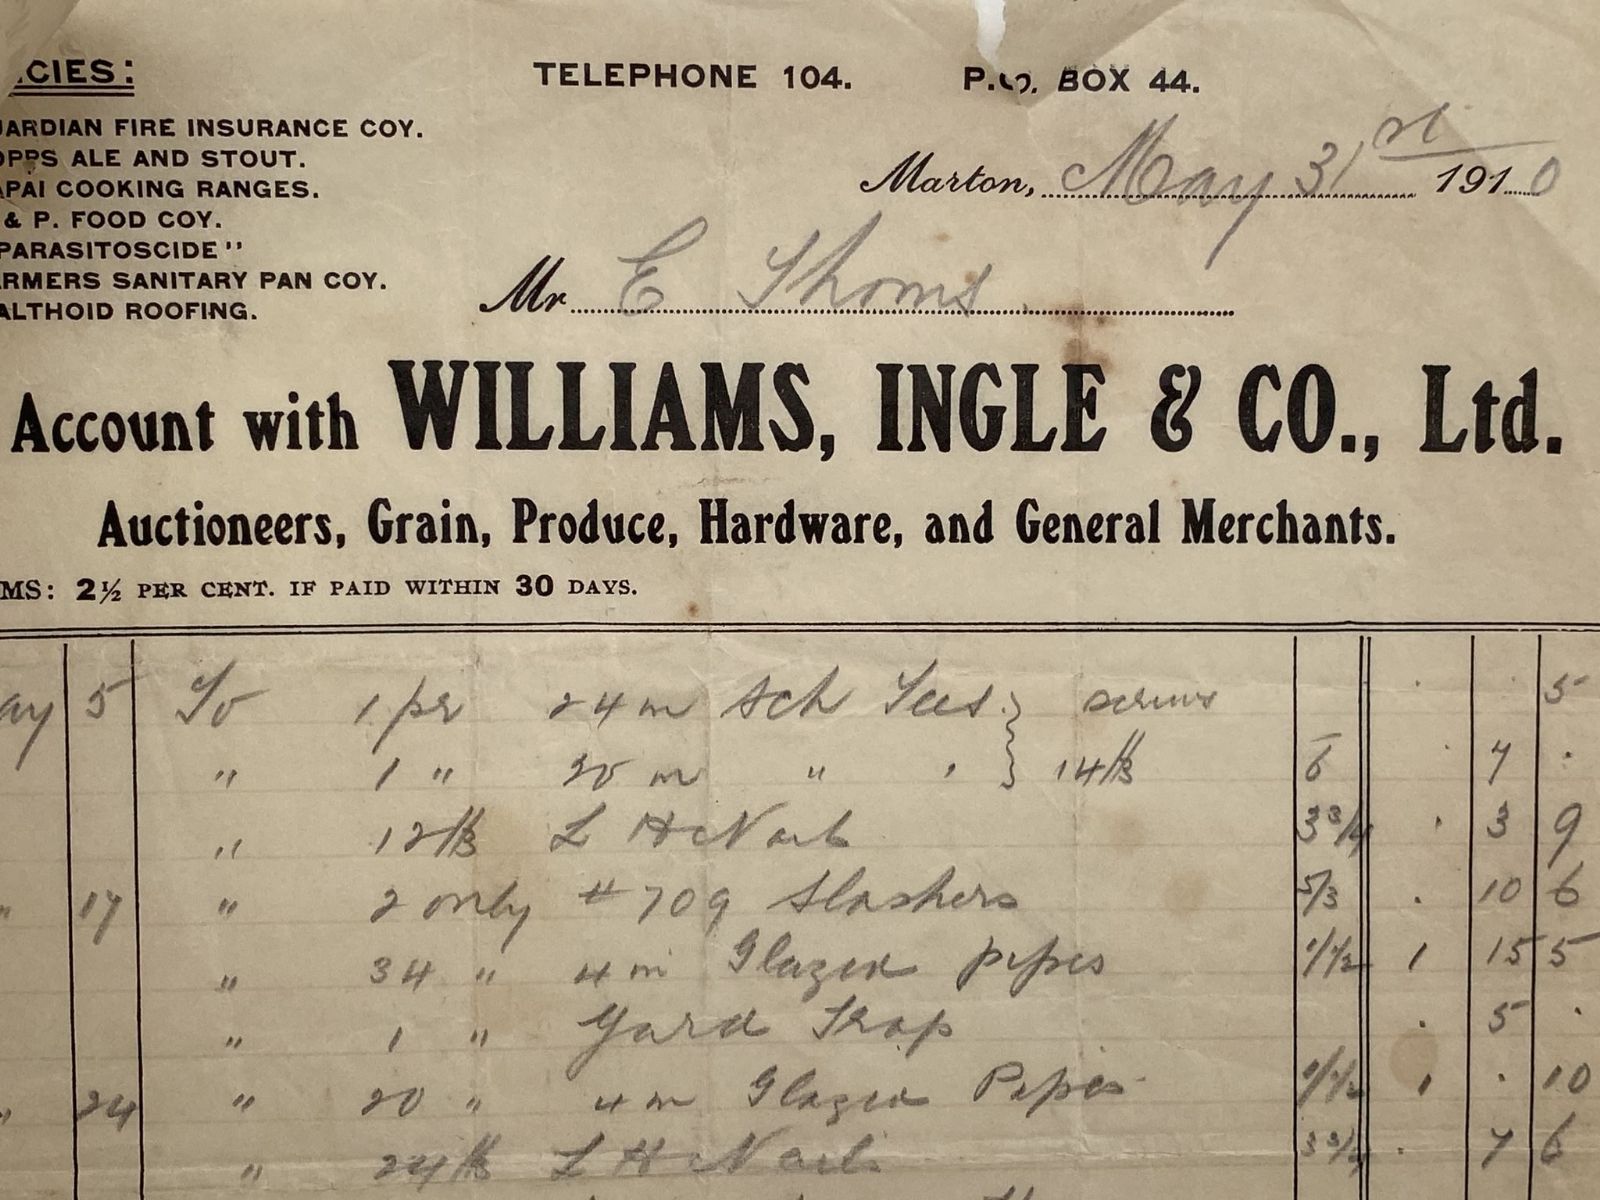 ANTIQUE INVOICE / RECEIPT: Williams, Ingle & Co. Ltd. Marton - 1910